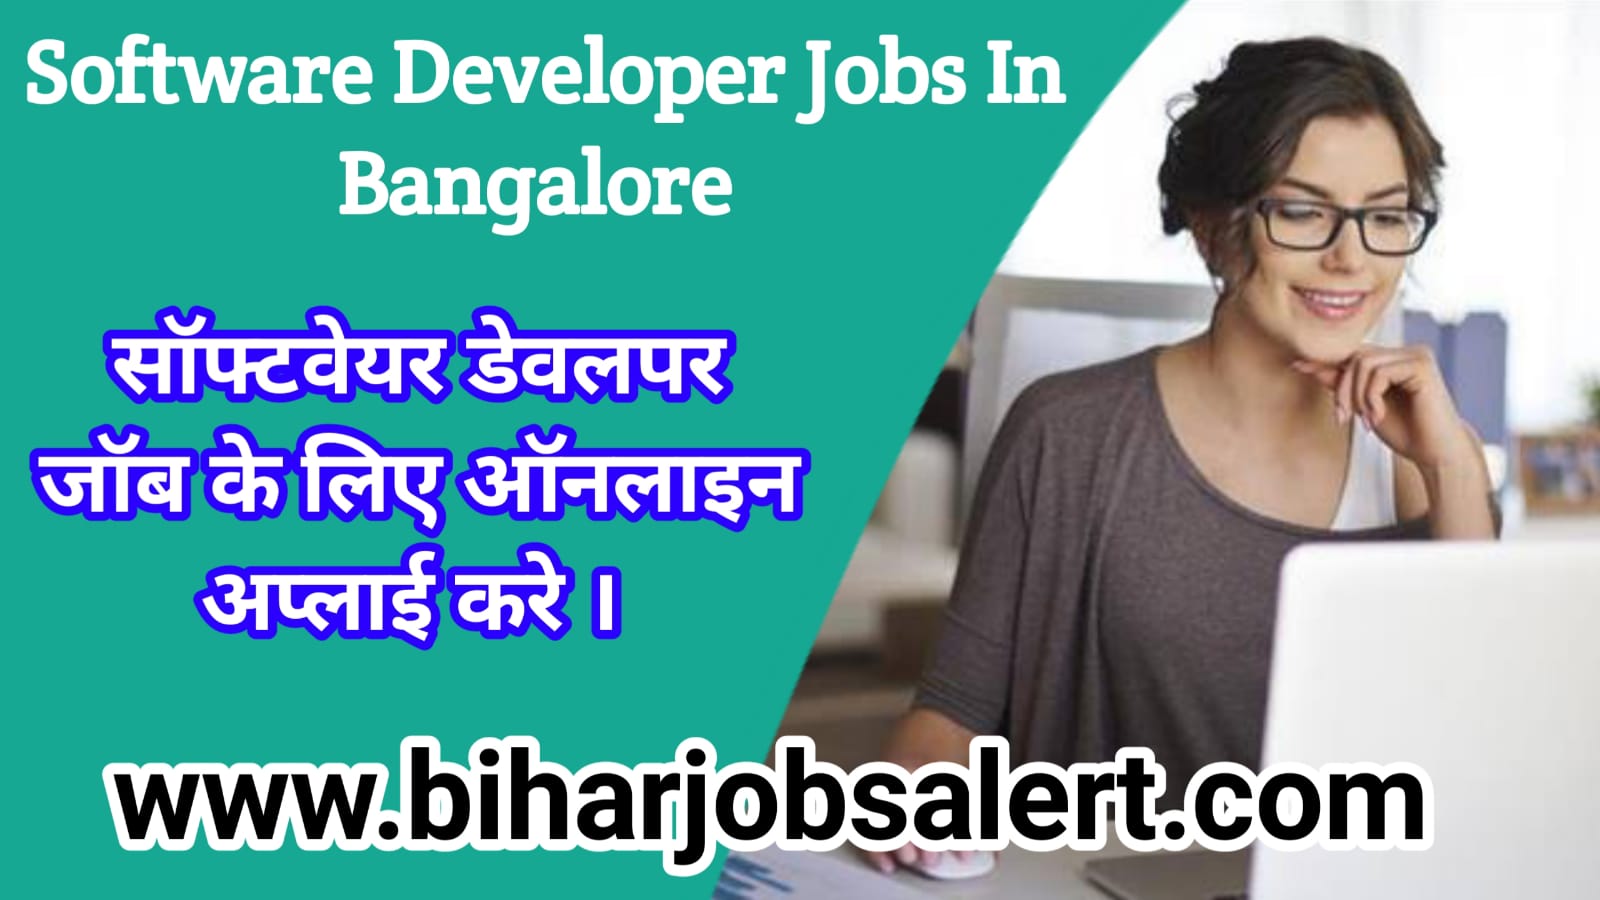 Software Developer Jobs In Bangalore